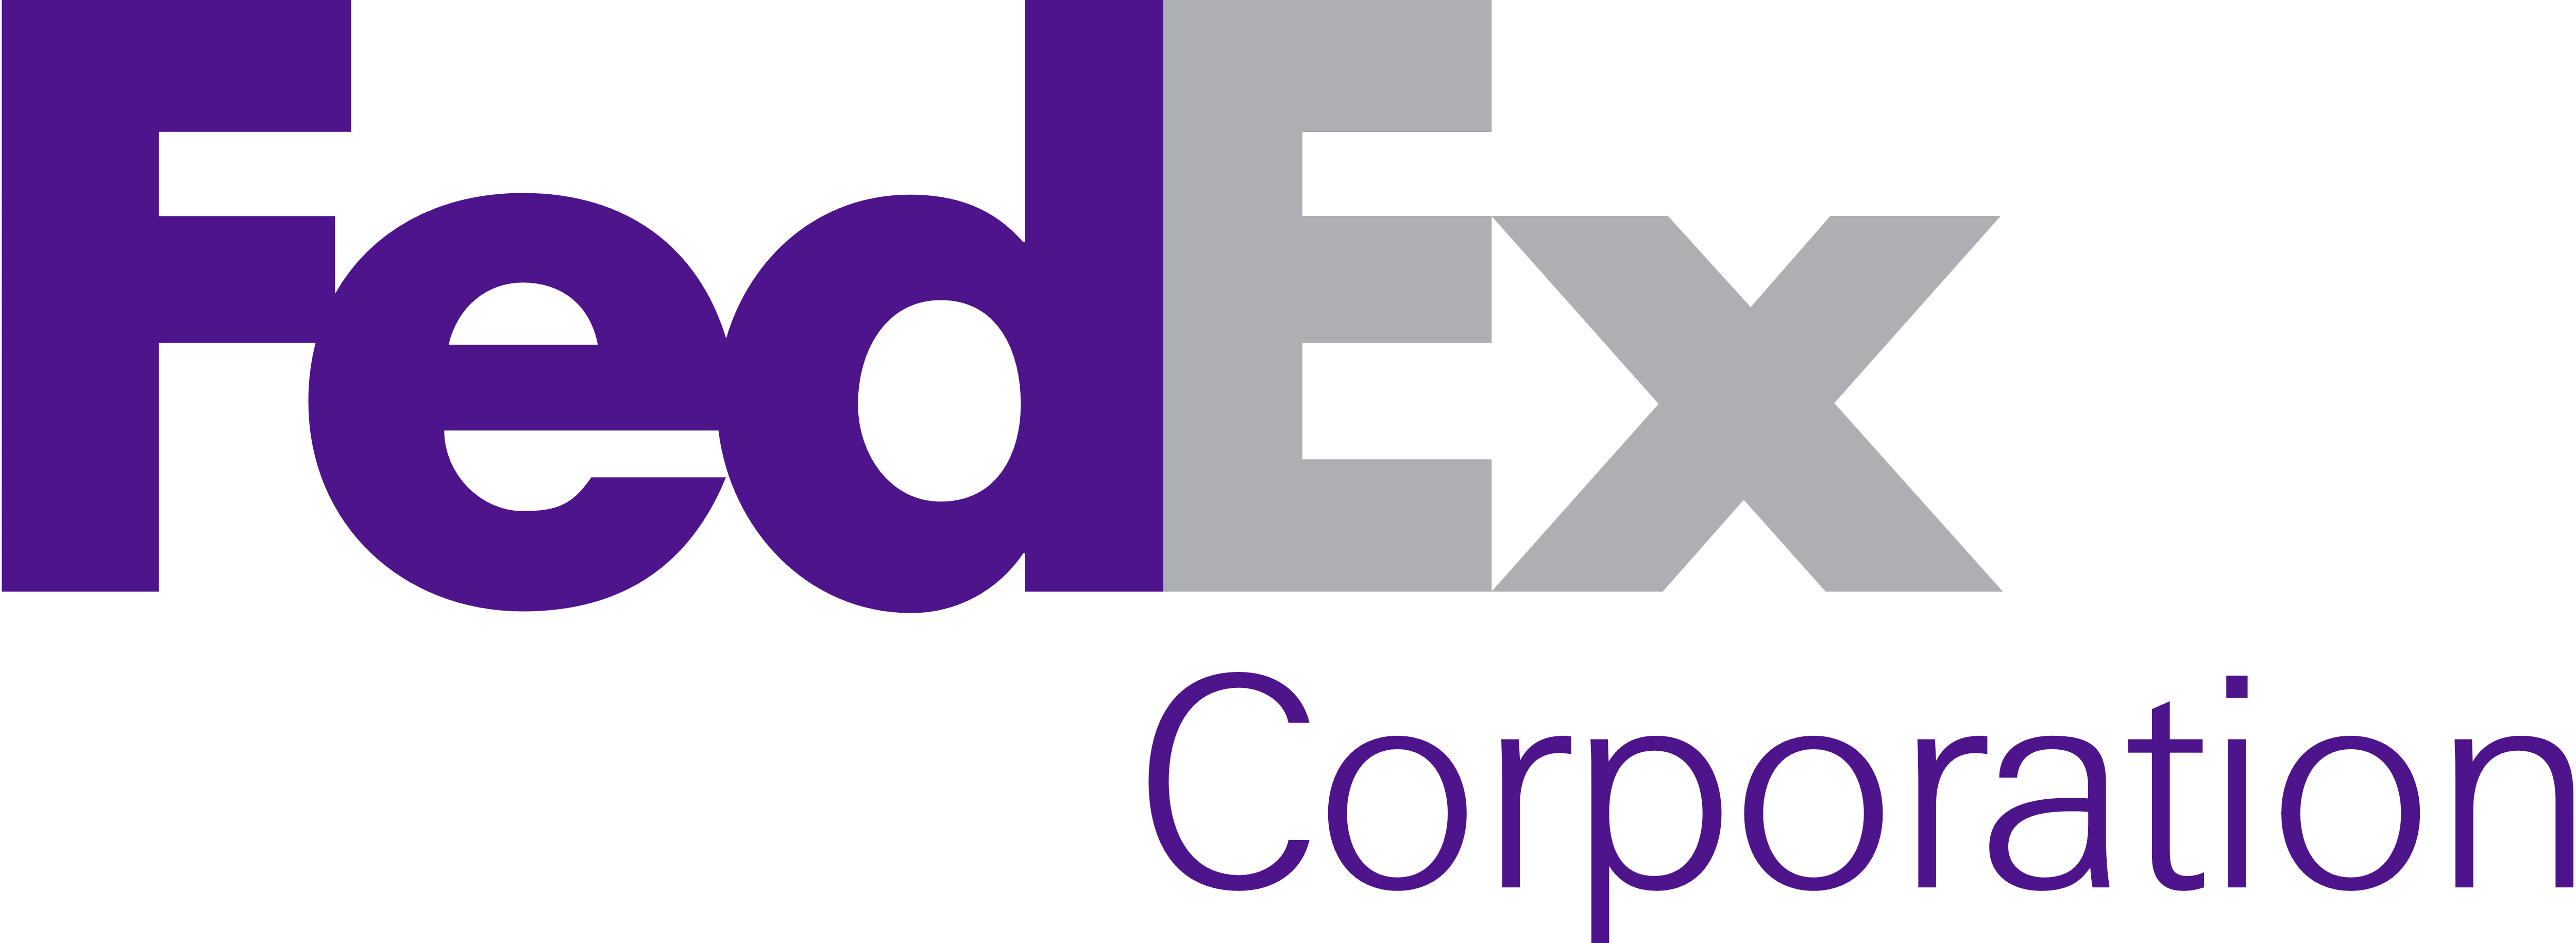 Fedex Corporation PNG - 99184